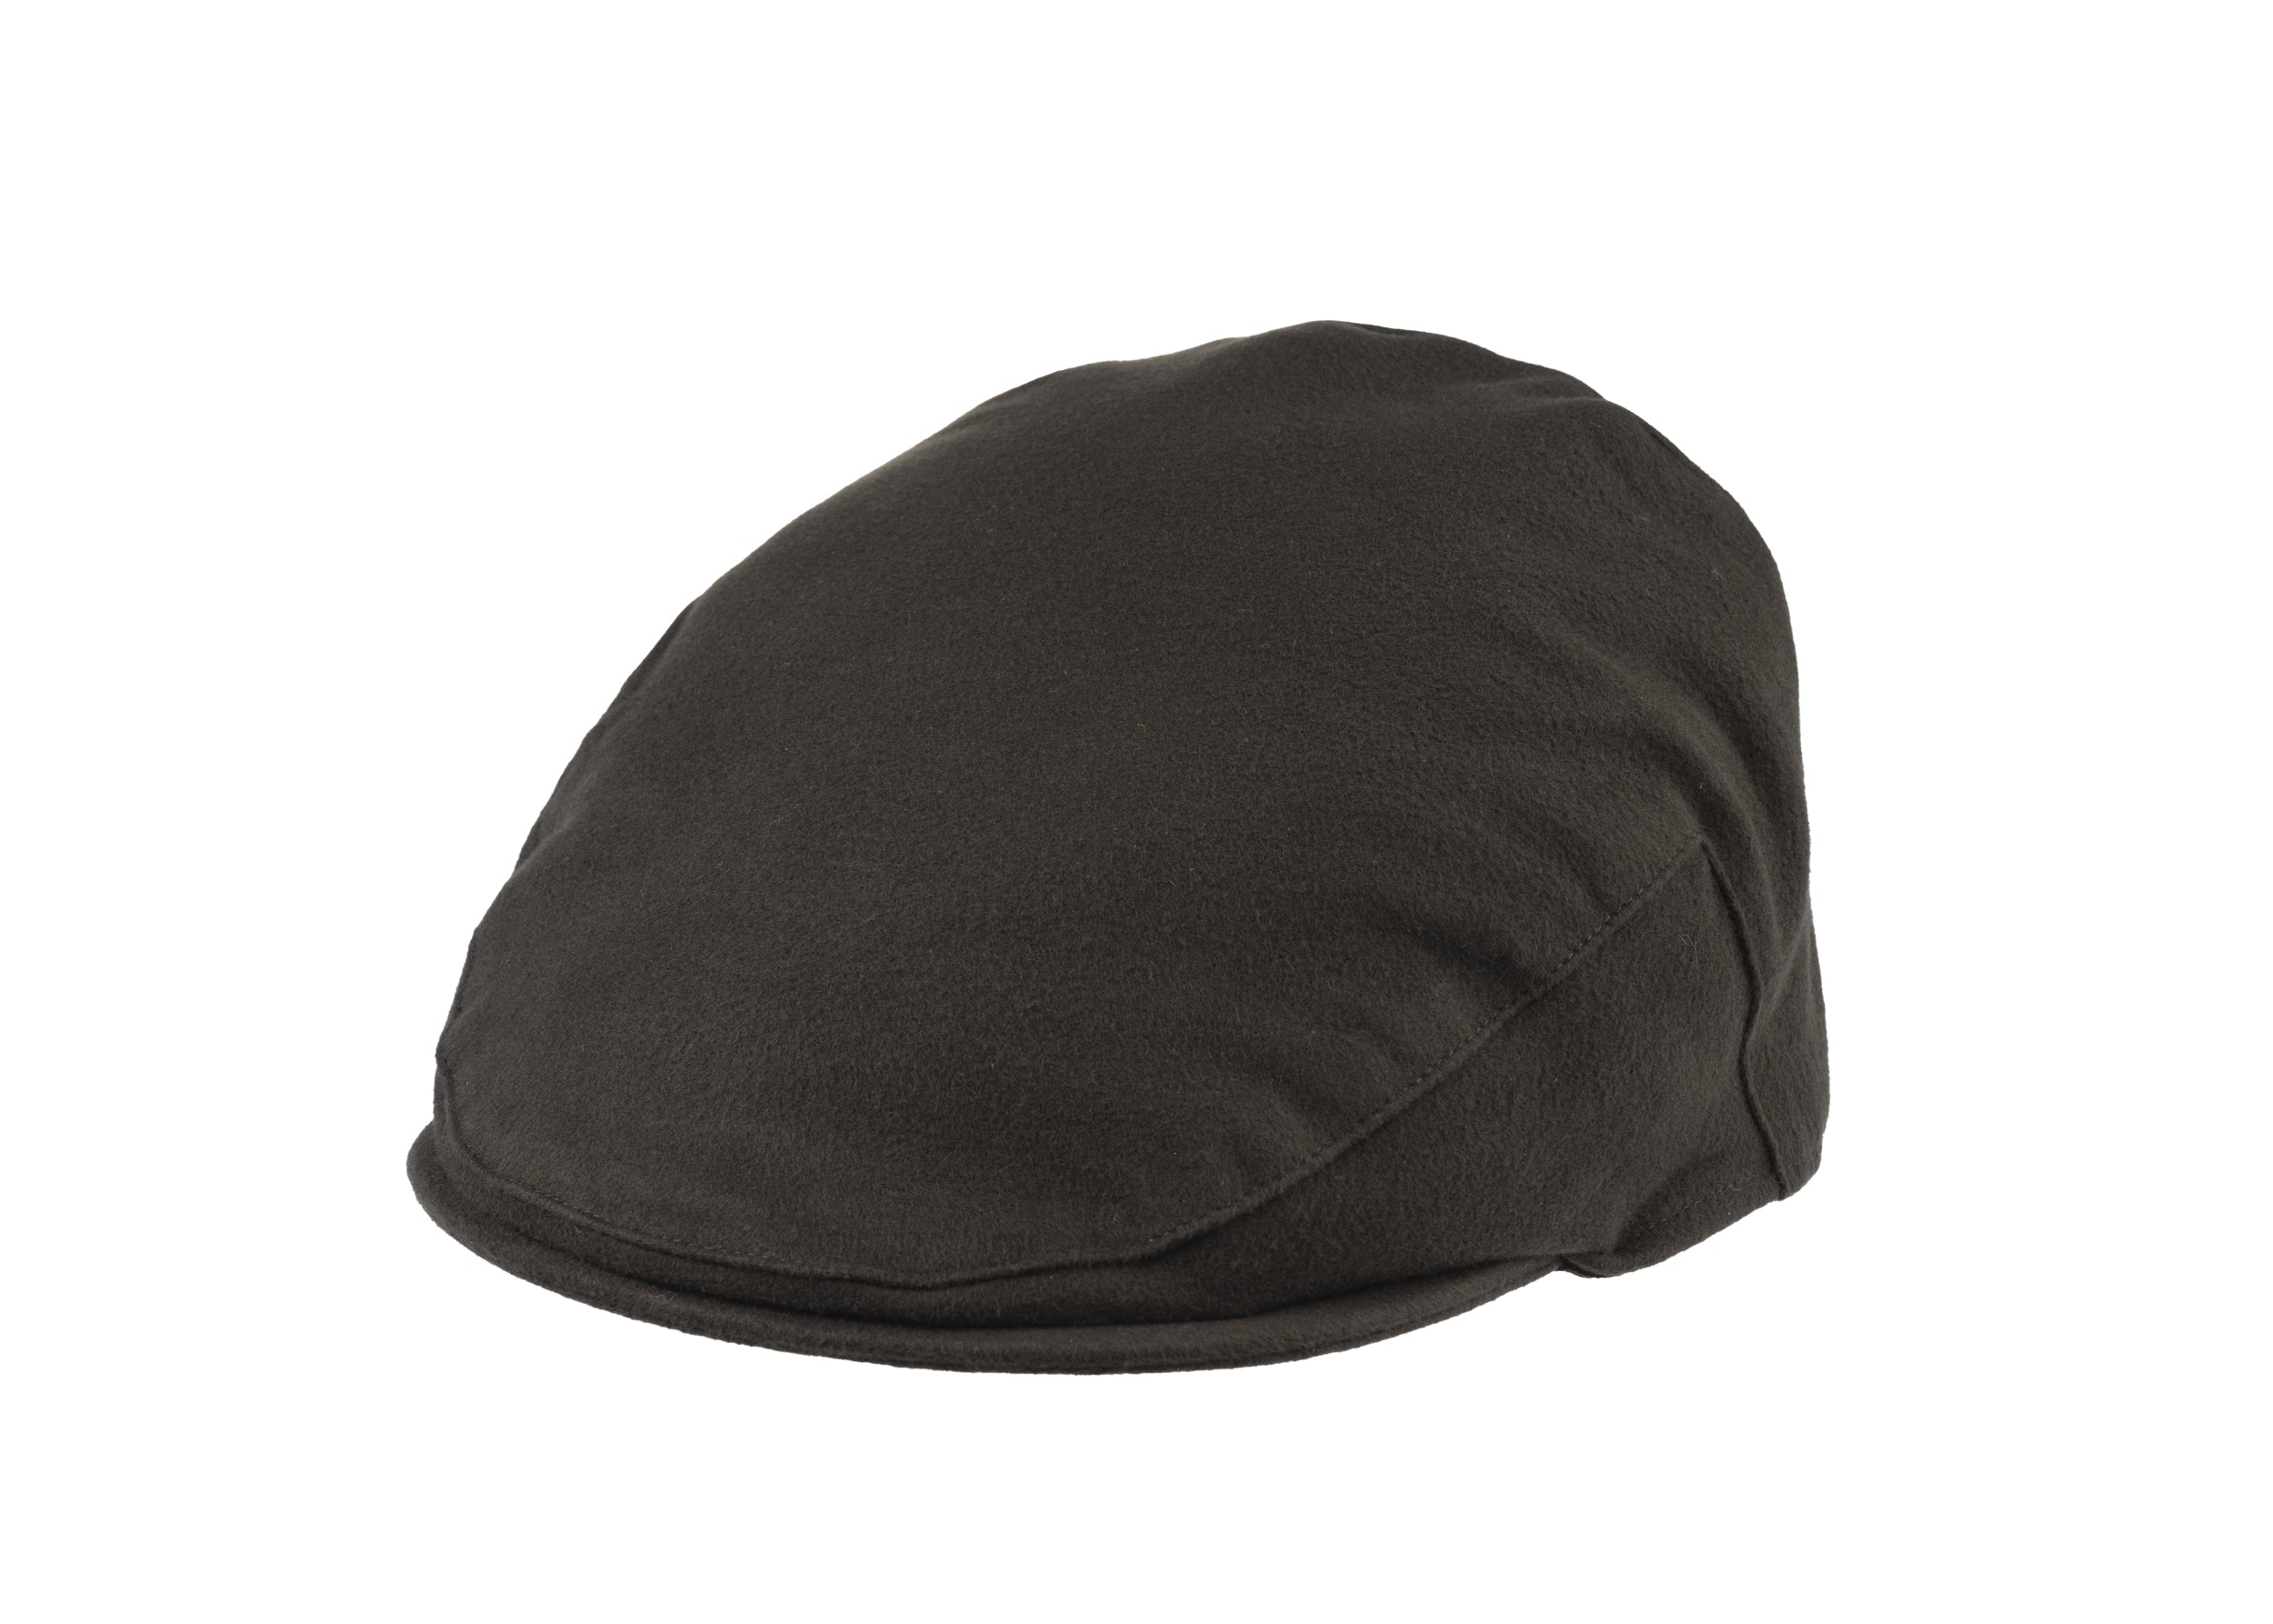 Balmoral moleskin cotton cap in Brown